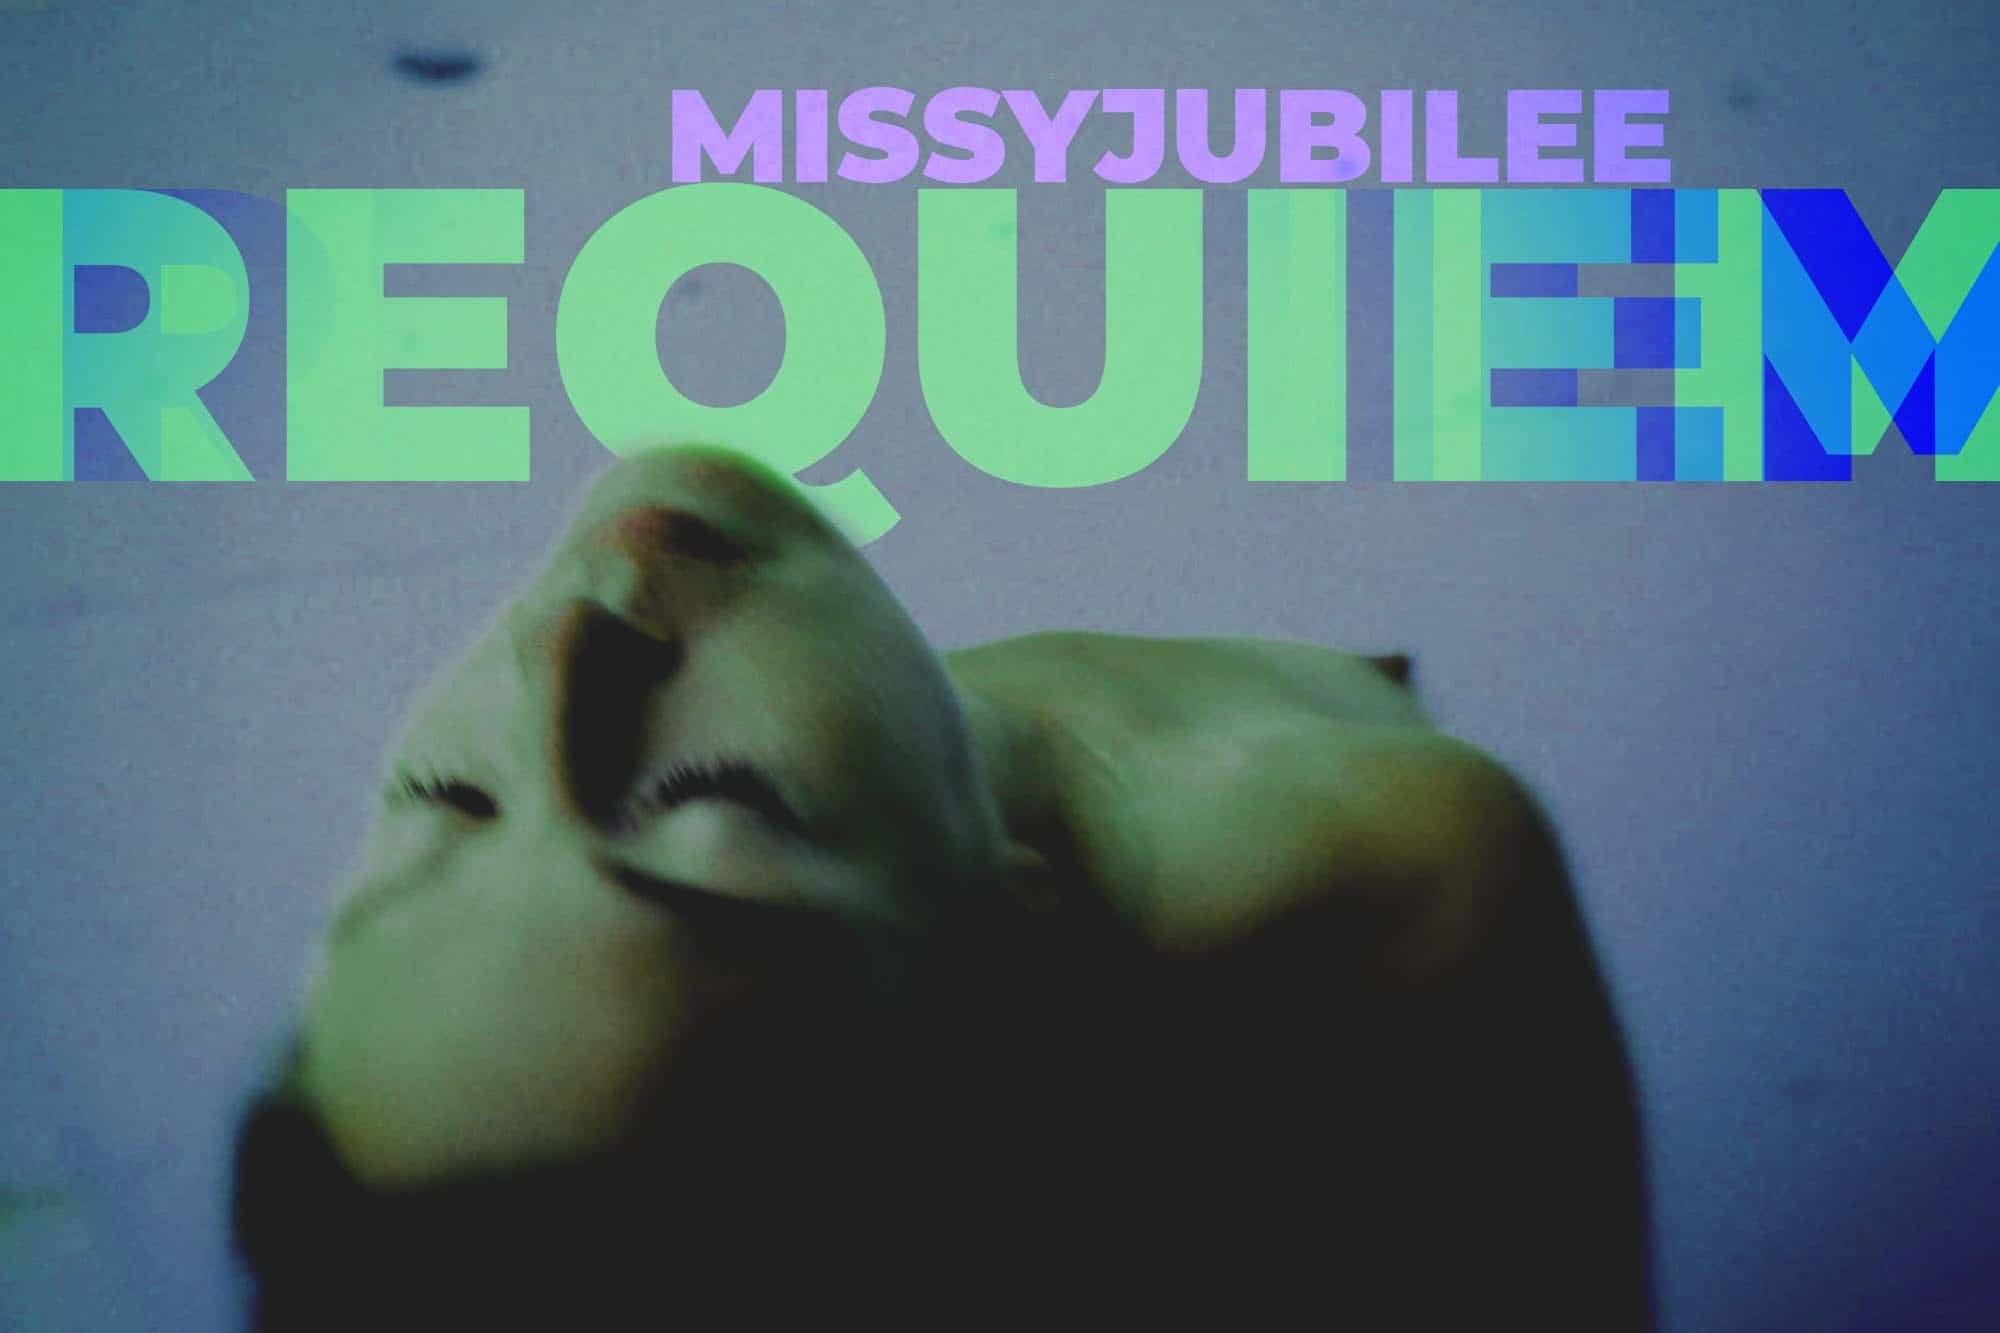 Film release poster Missy Jubilee 036 REQUIEM